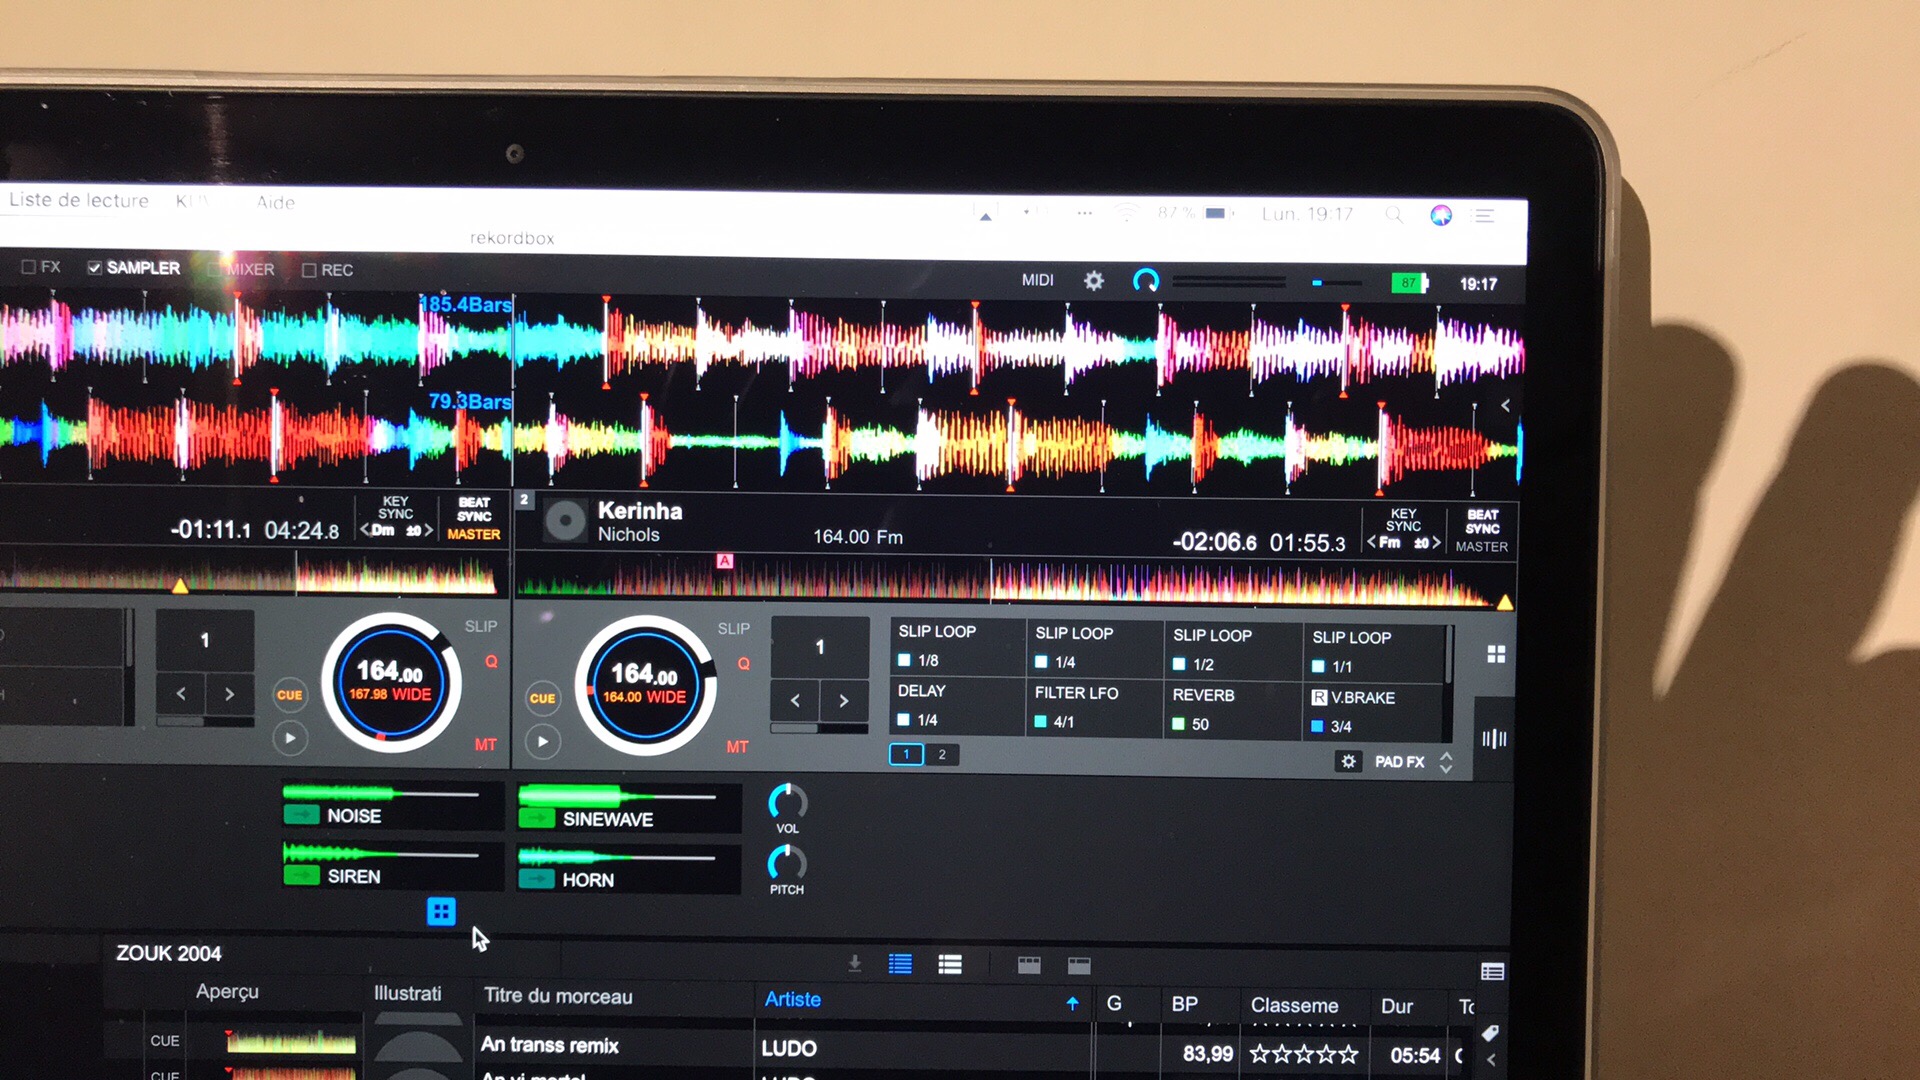 Pioneer DJ rekordbox 6.7.4 instal the new version for ios